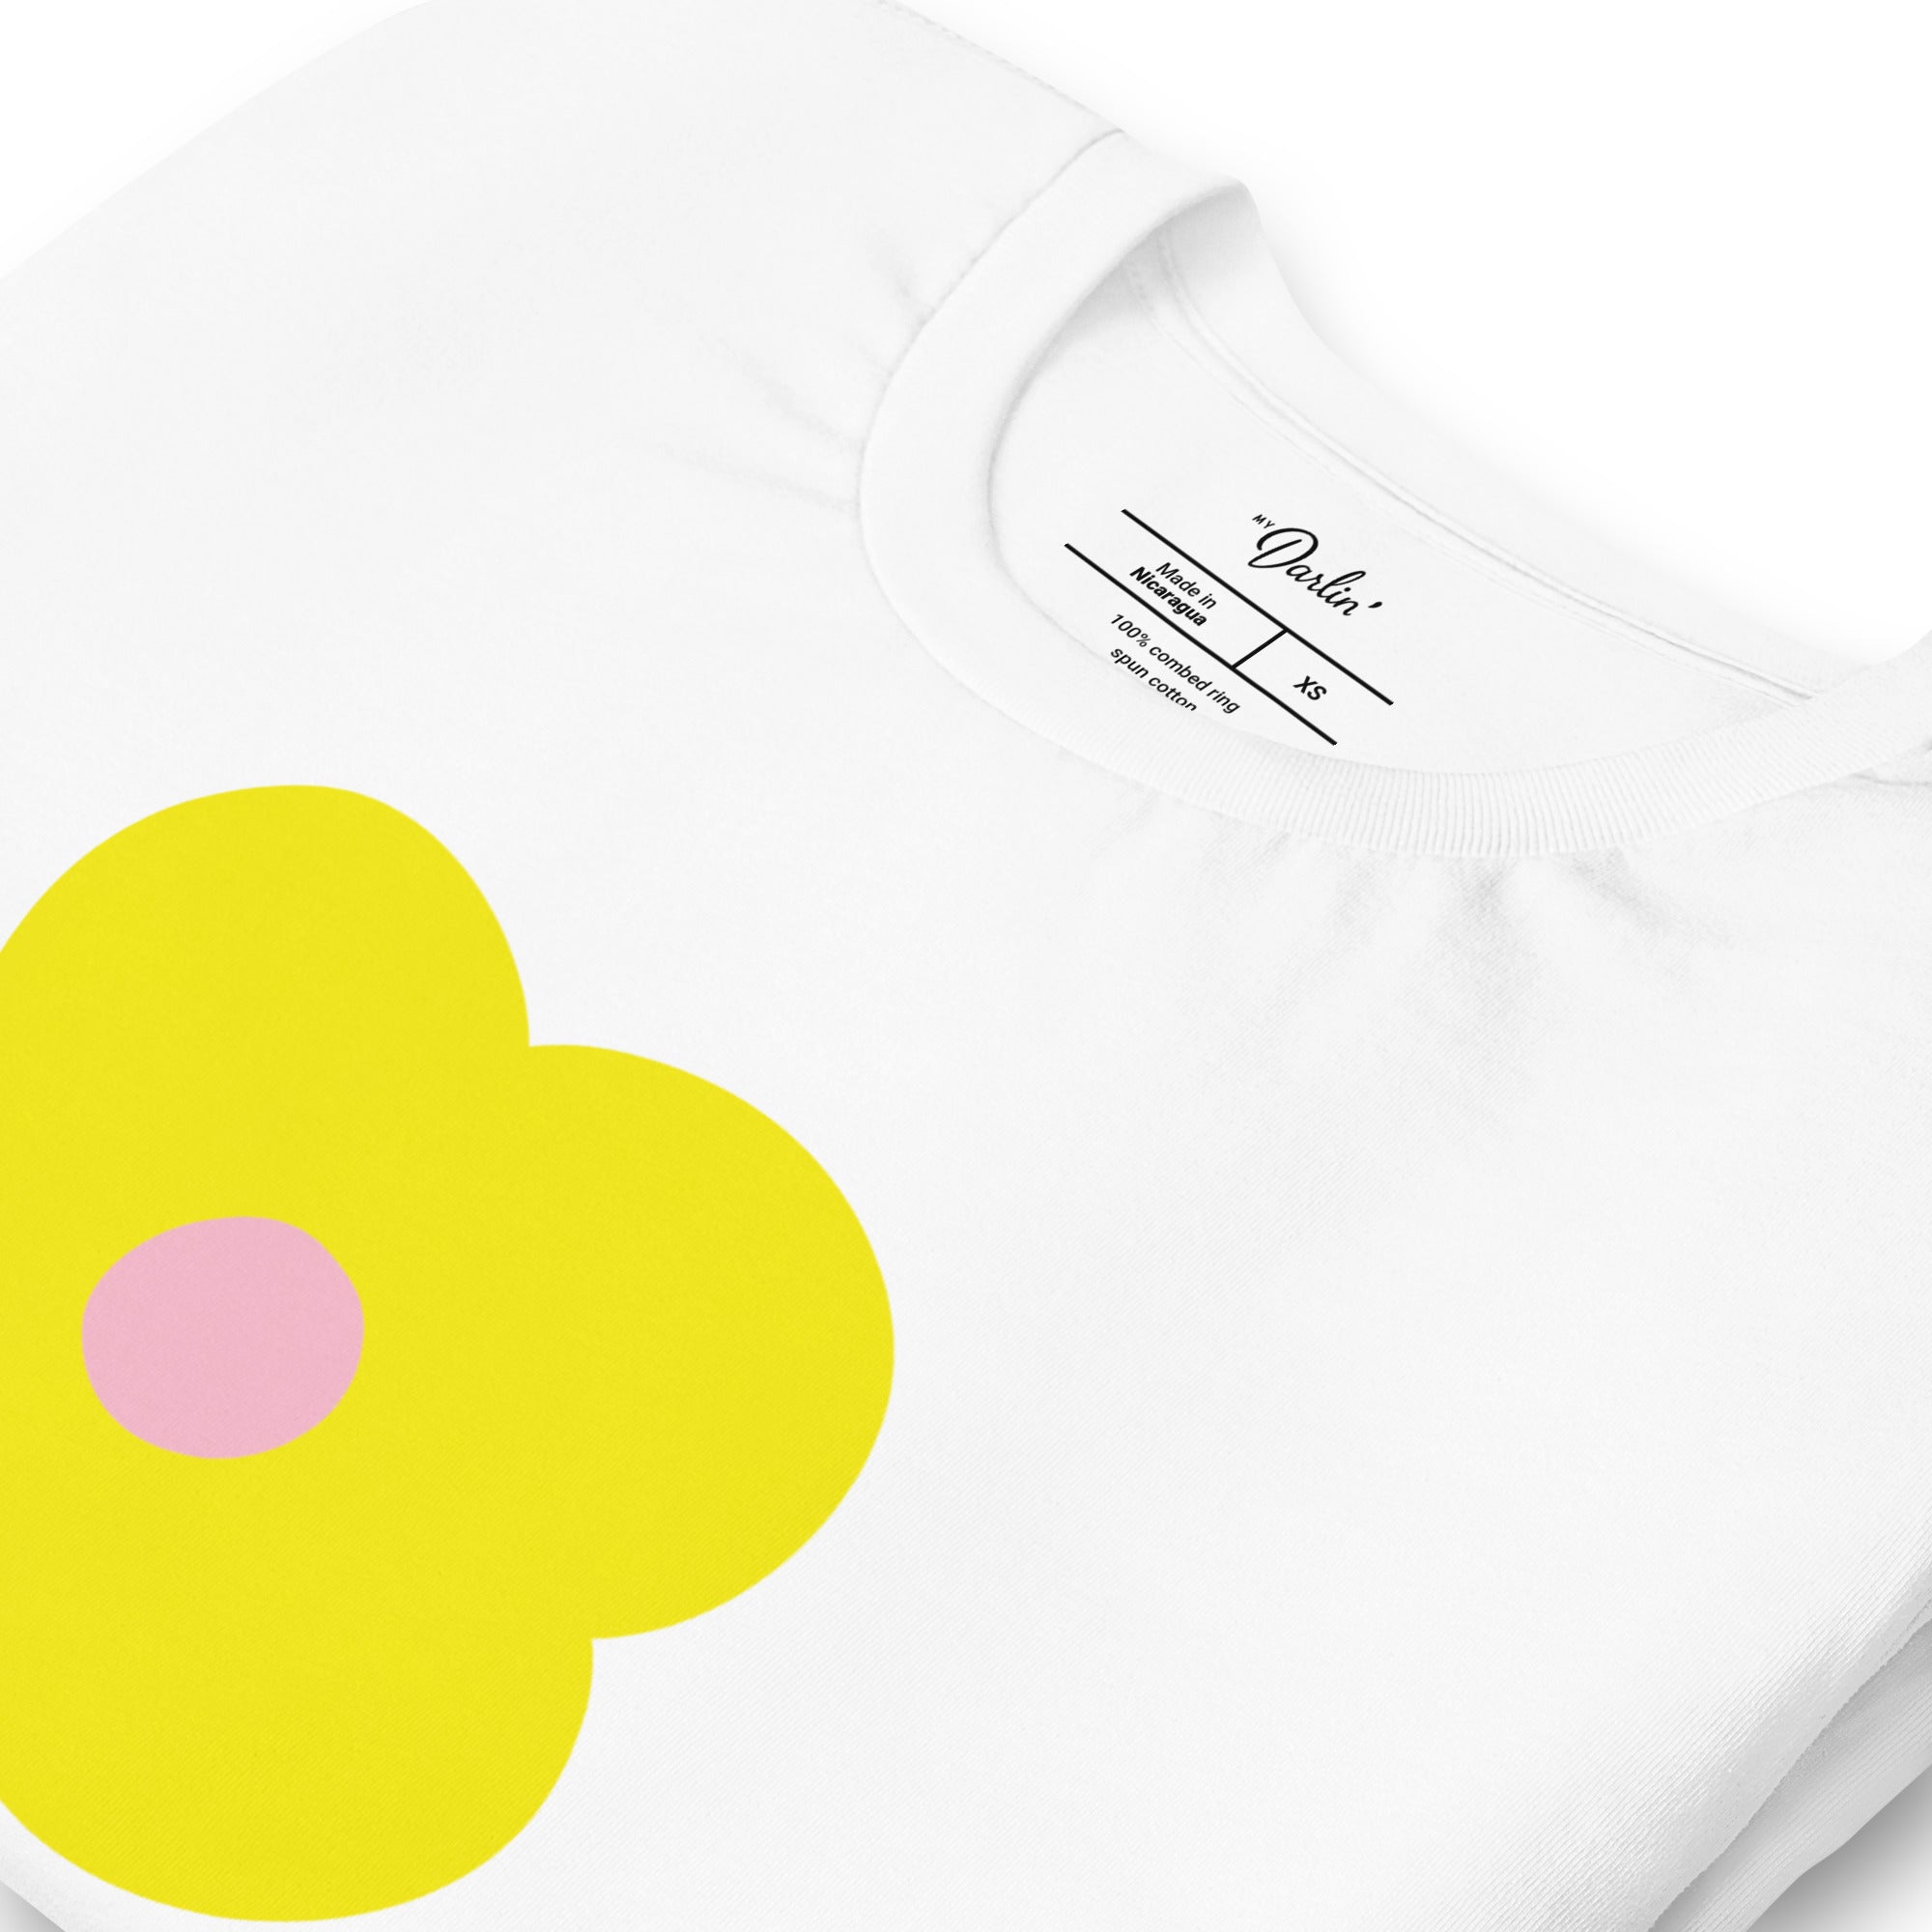 Buttercup Flower Everyone Classic T-shirt